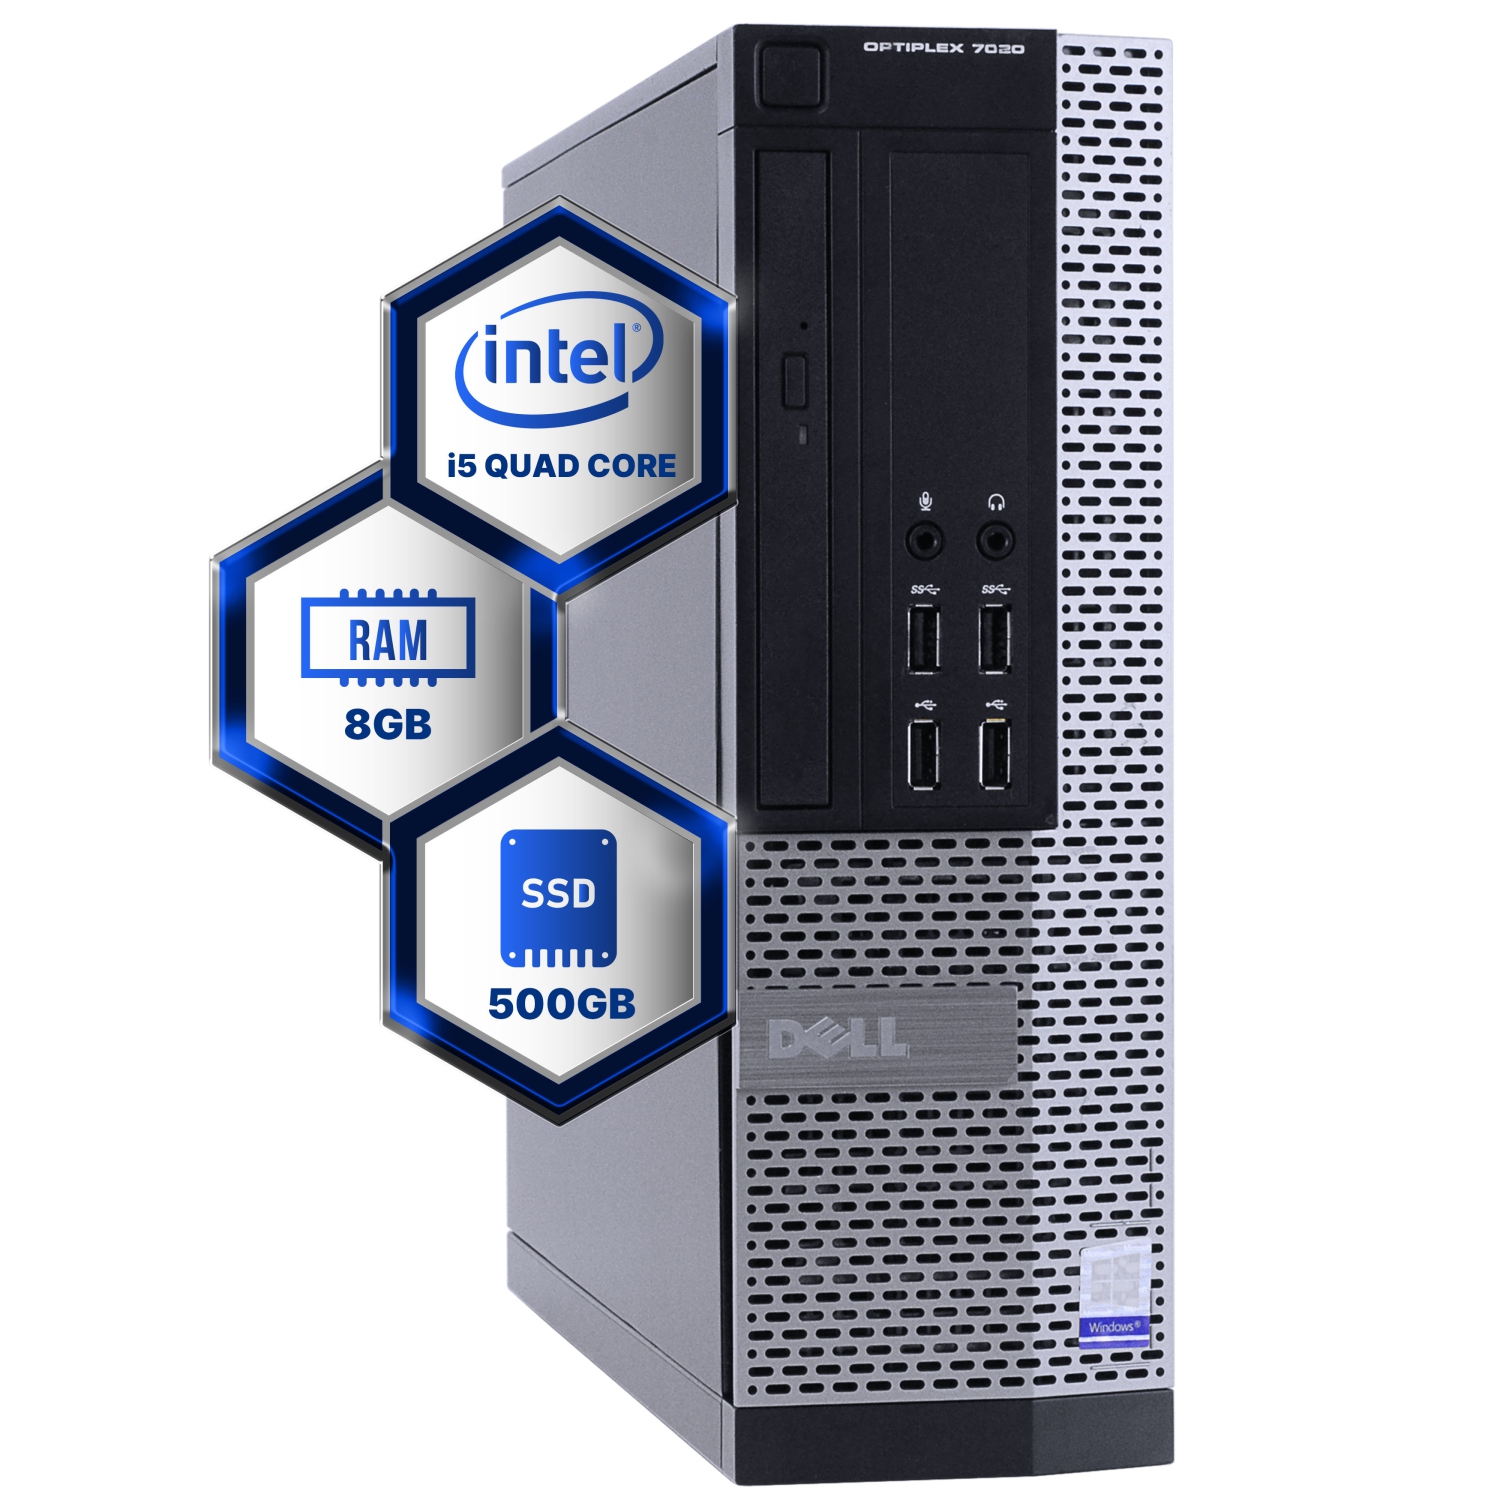 Refurbished (Good) - Dell Optiplex 4th Gen Desktop Computer | Quad Core Intel i5 (3.2) | 8GB DDR3 RAM | 500GB SSD | Windows 10 Professional | Home or Office PC